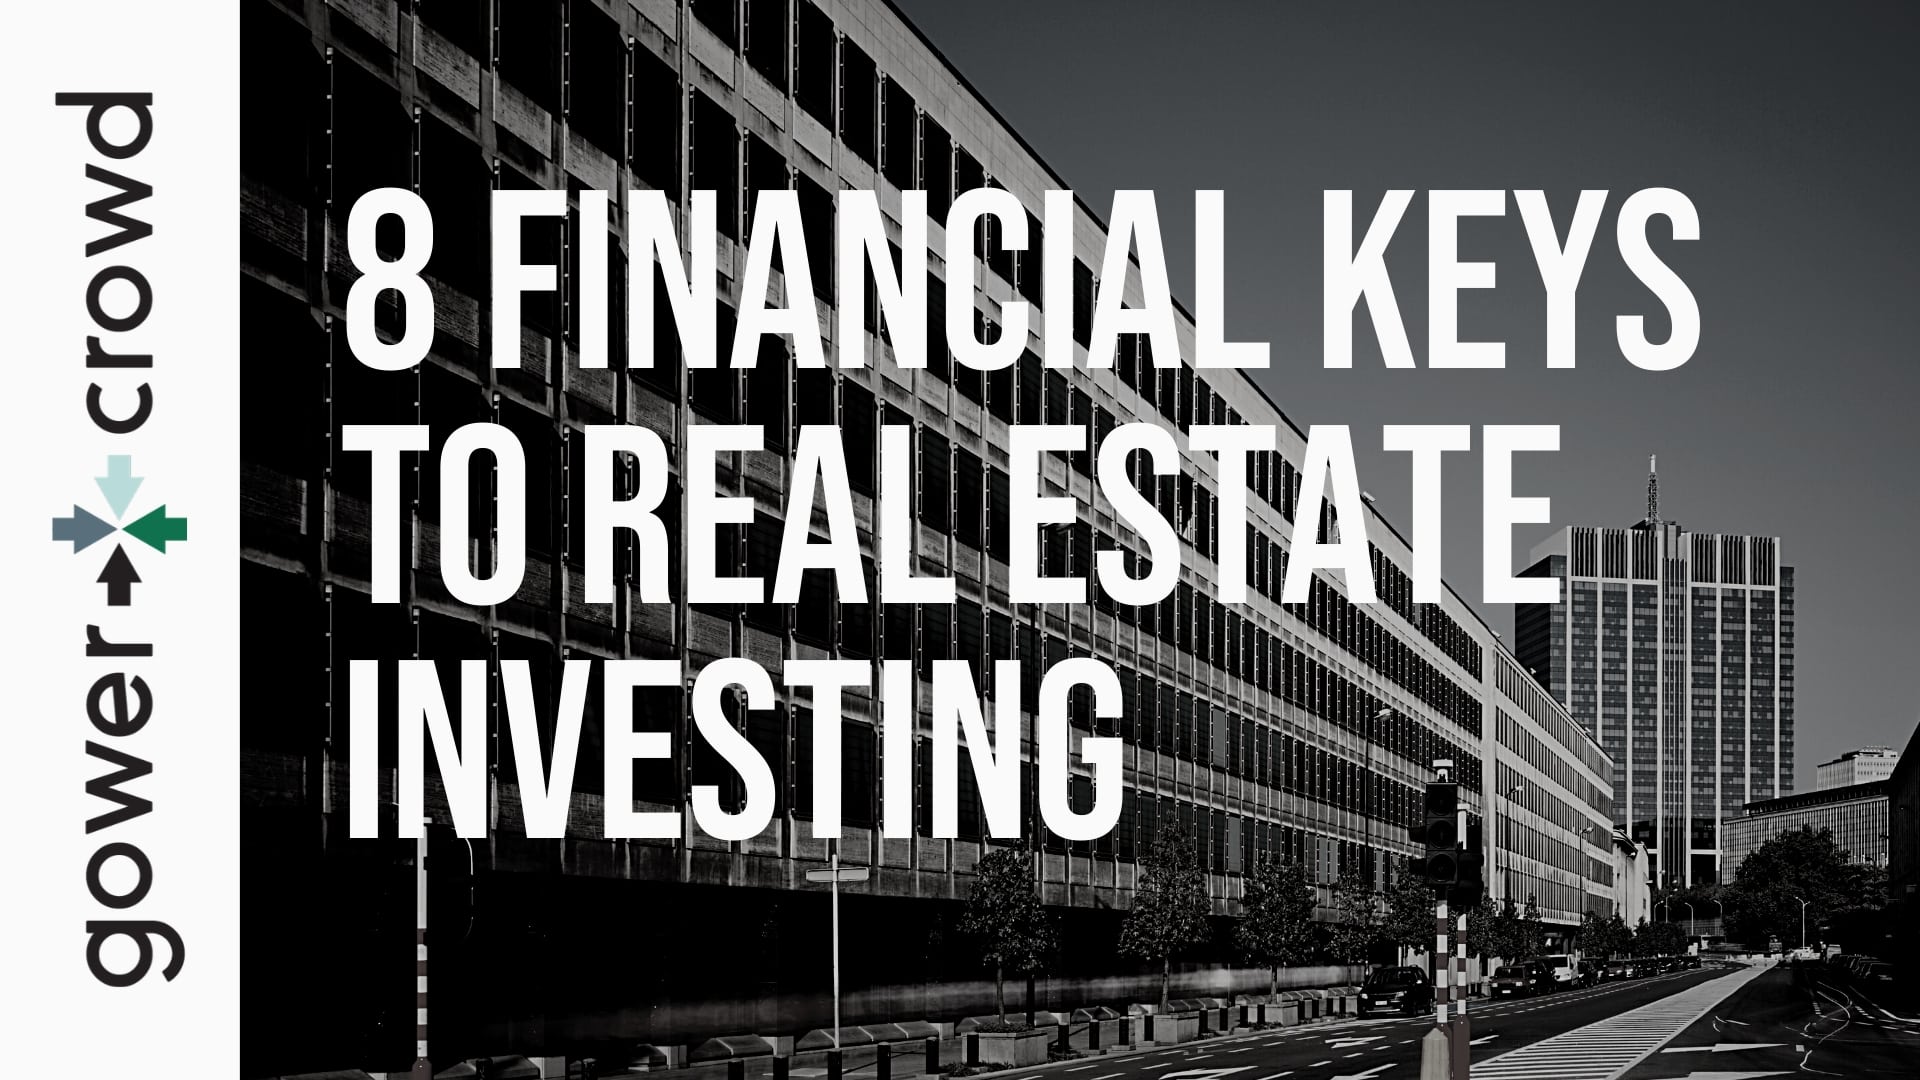 8-Financial-Keys